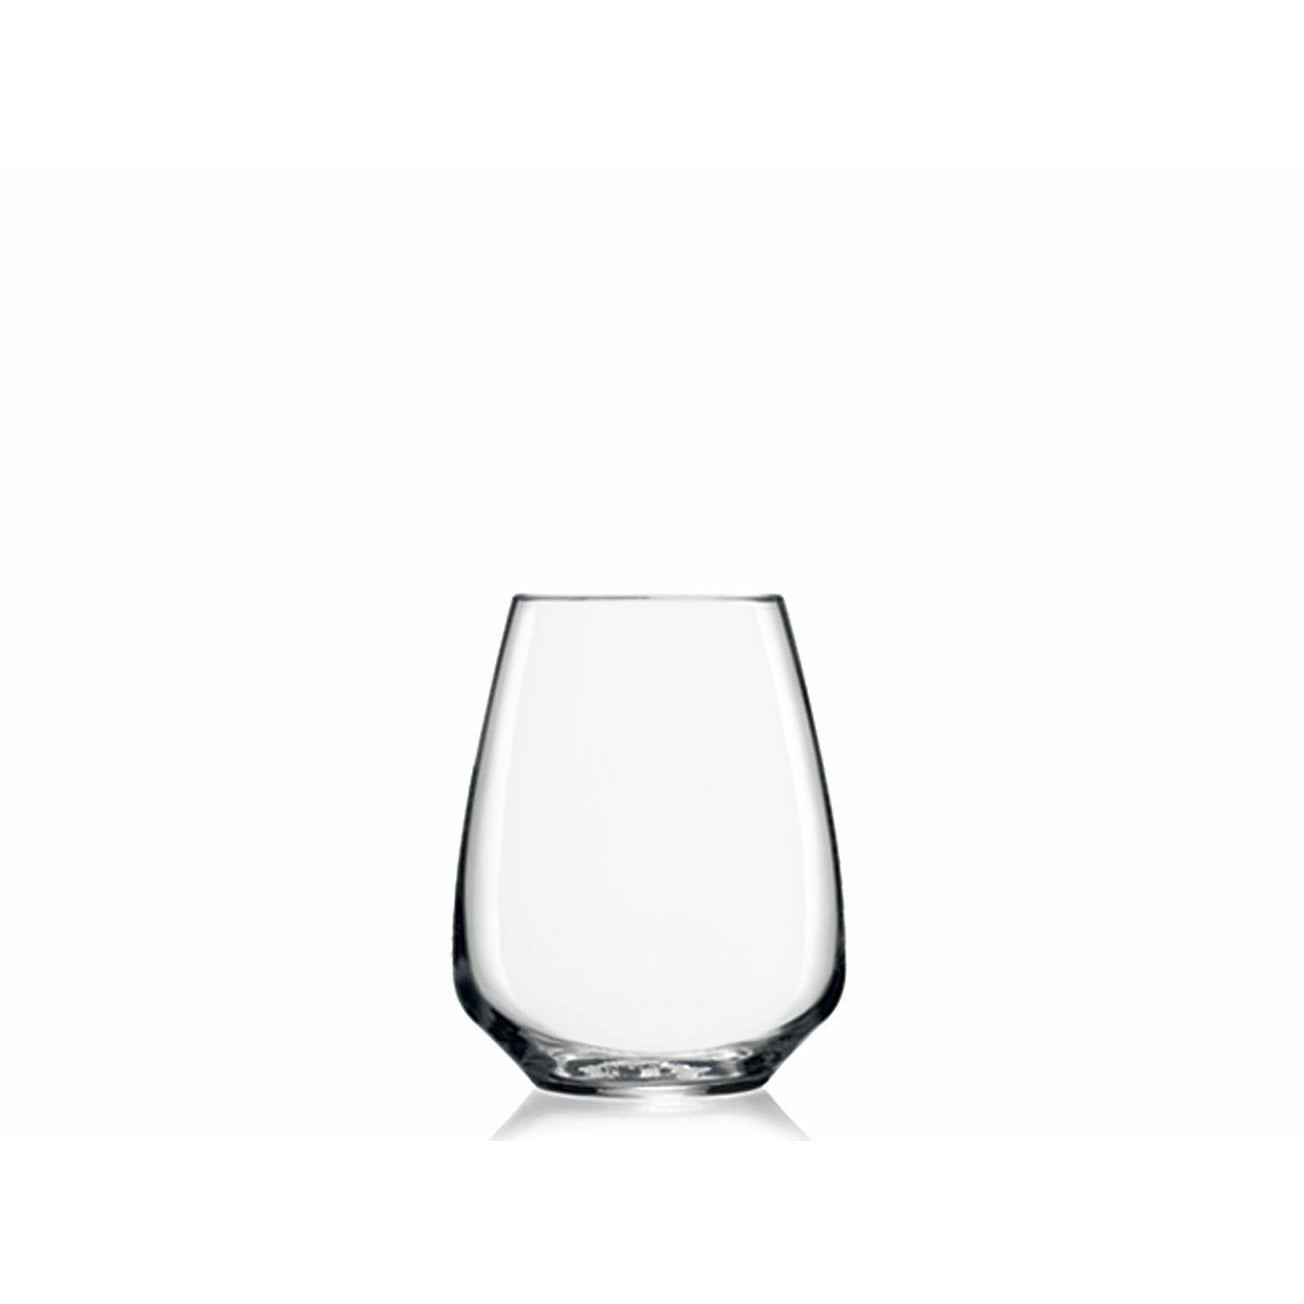 Luigi Bormioli Atelier vandglas/hvidvinklas, 2 stykker